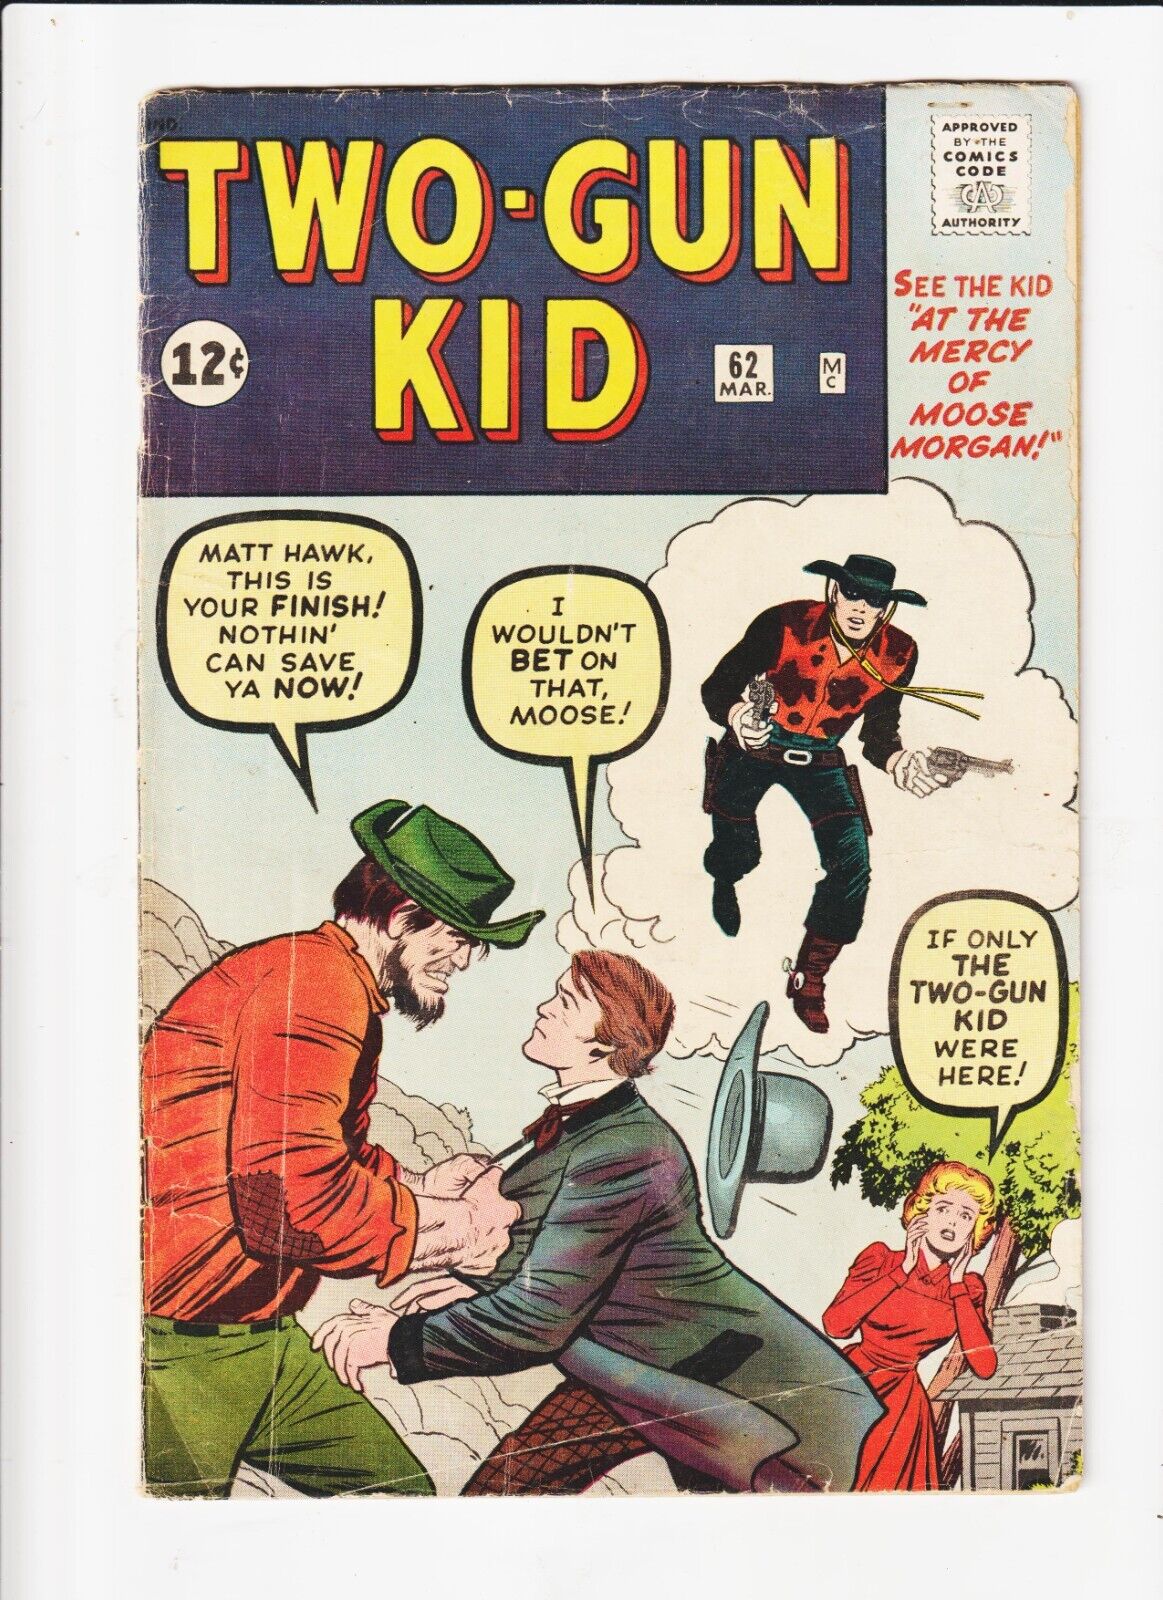 TWO-GUN KID, #62, MAY 1963, JACK KIRBY   Marvel Comics THE MERCY OF MOOSE MORGAN